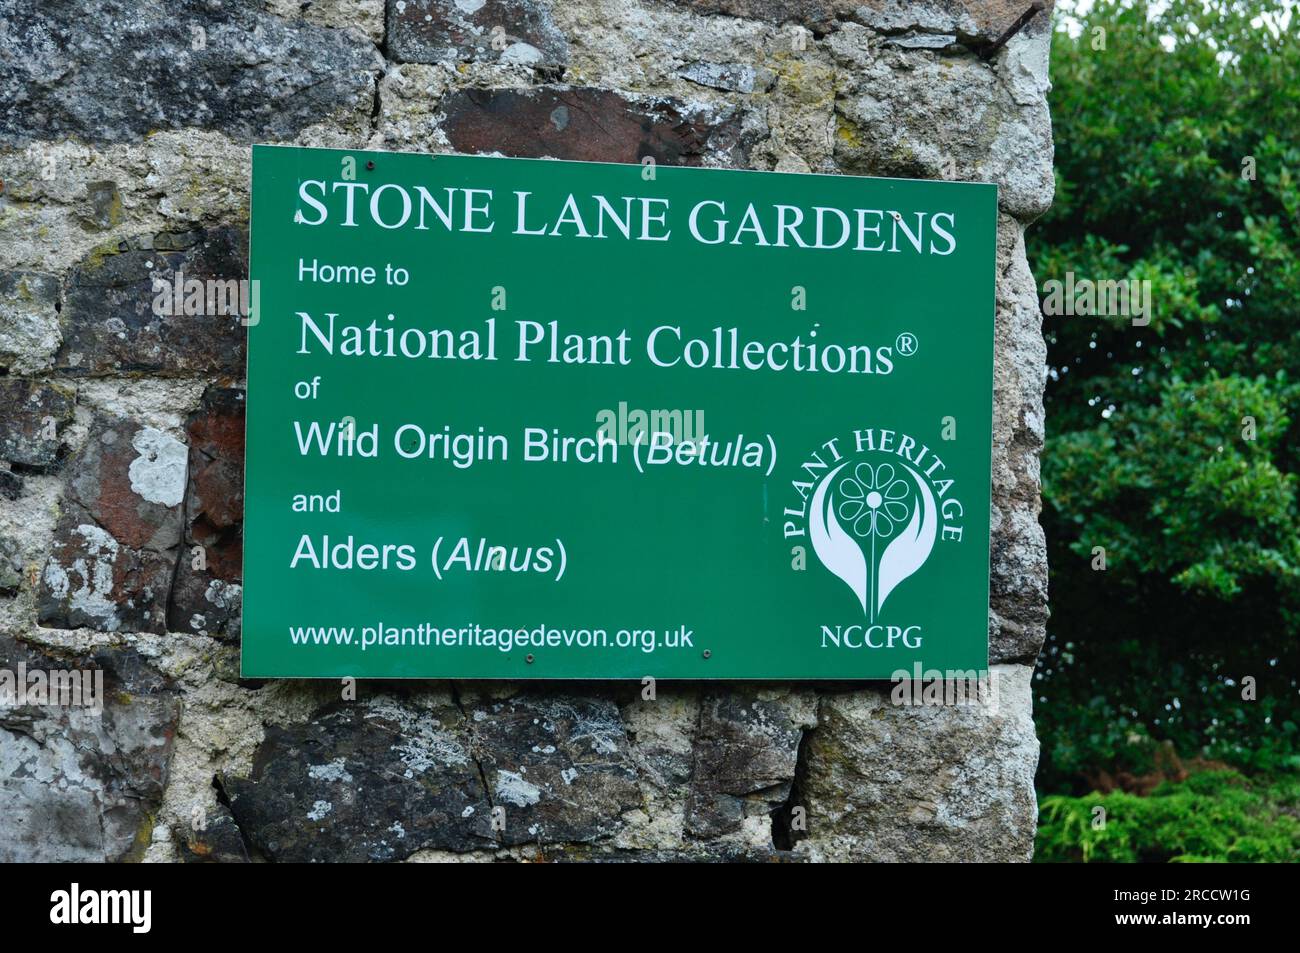 Stone Lane Gardens, Banque D'Images